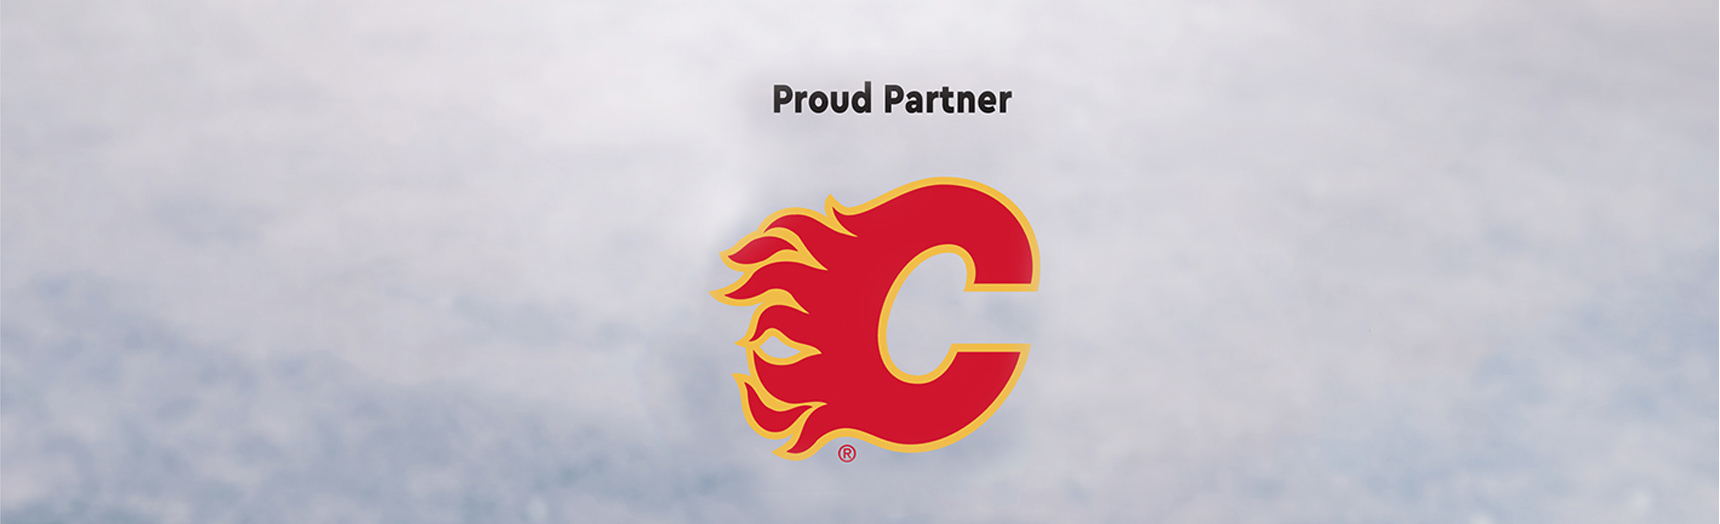 NHL Calgary Partner